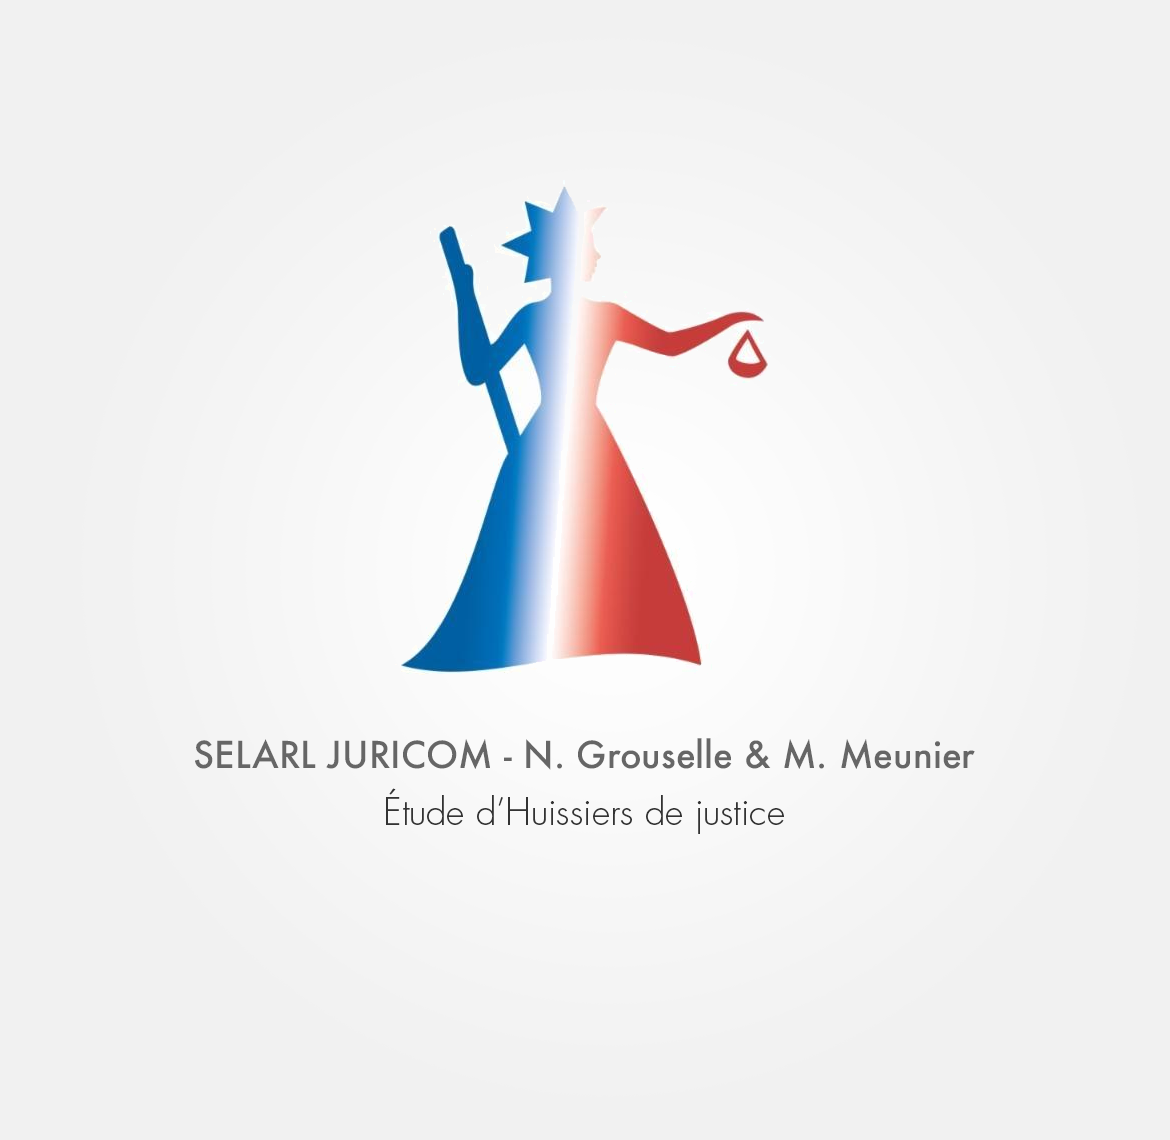 SELARL JURICOM – Nicolas GROUSELLE & Maxime MEUNIER